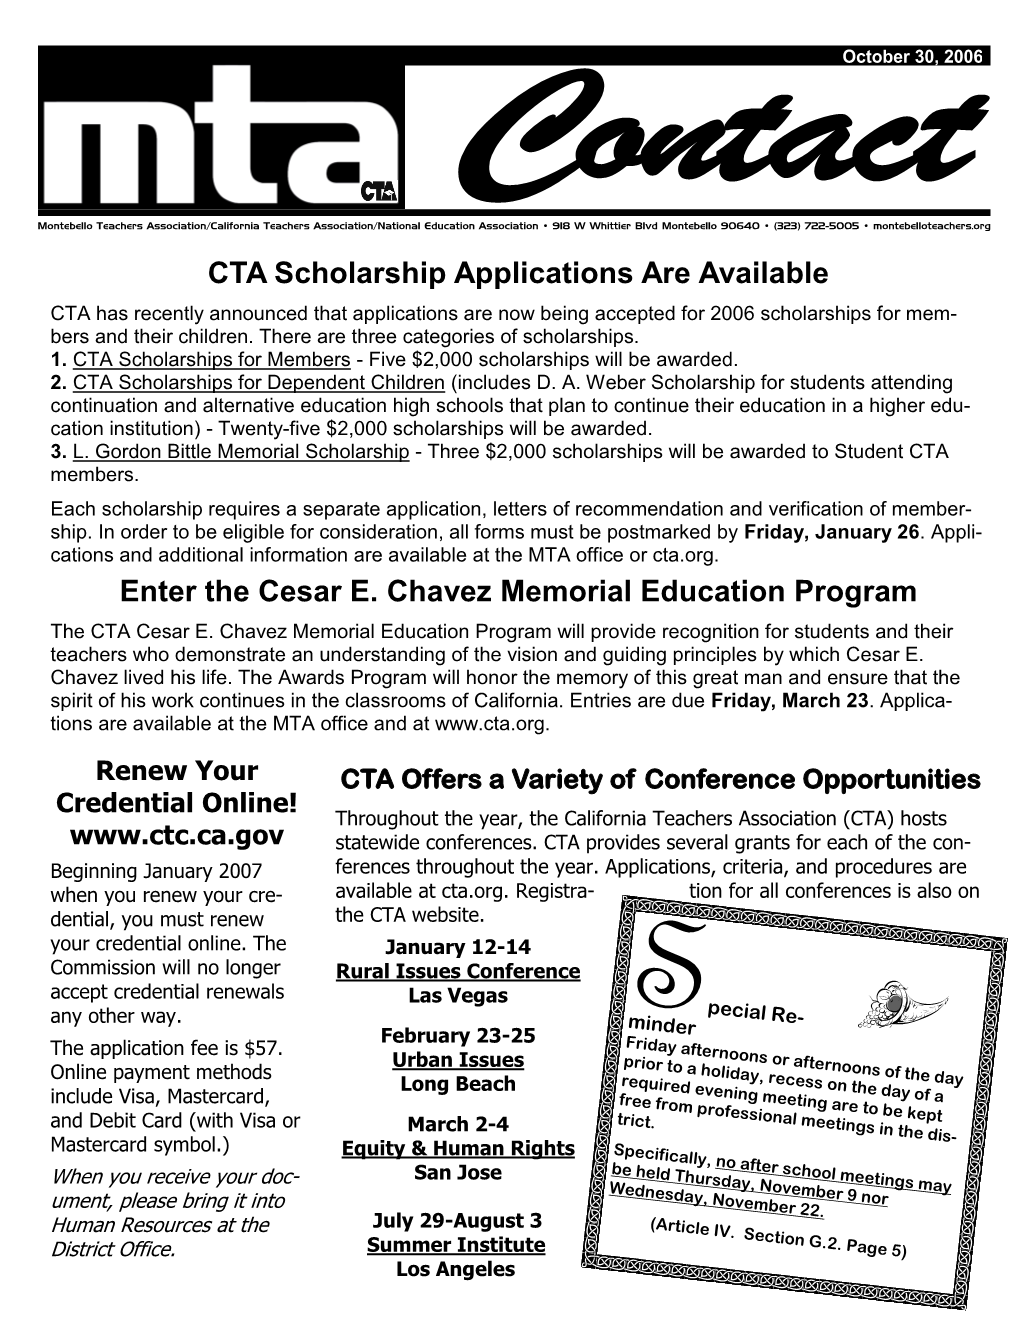 CTA Scholarship Applications Are Available Enter the Cesar E